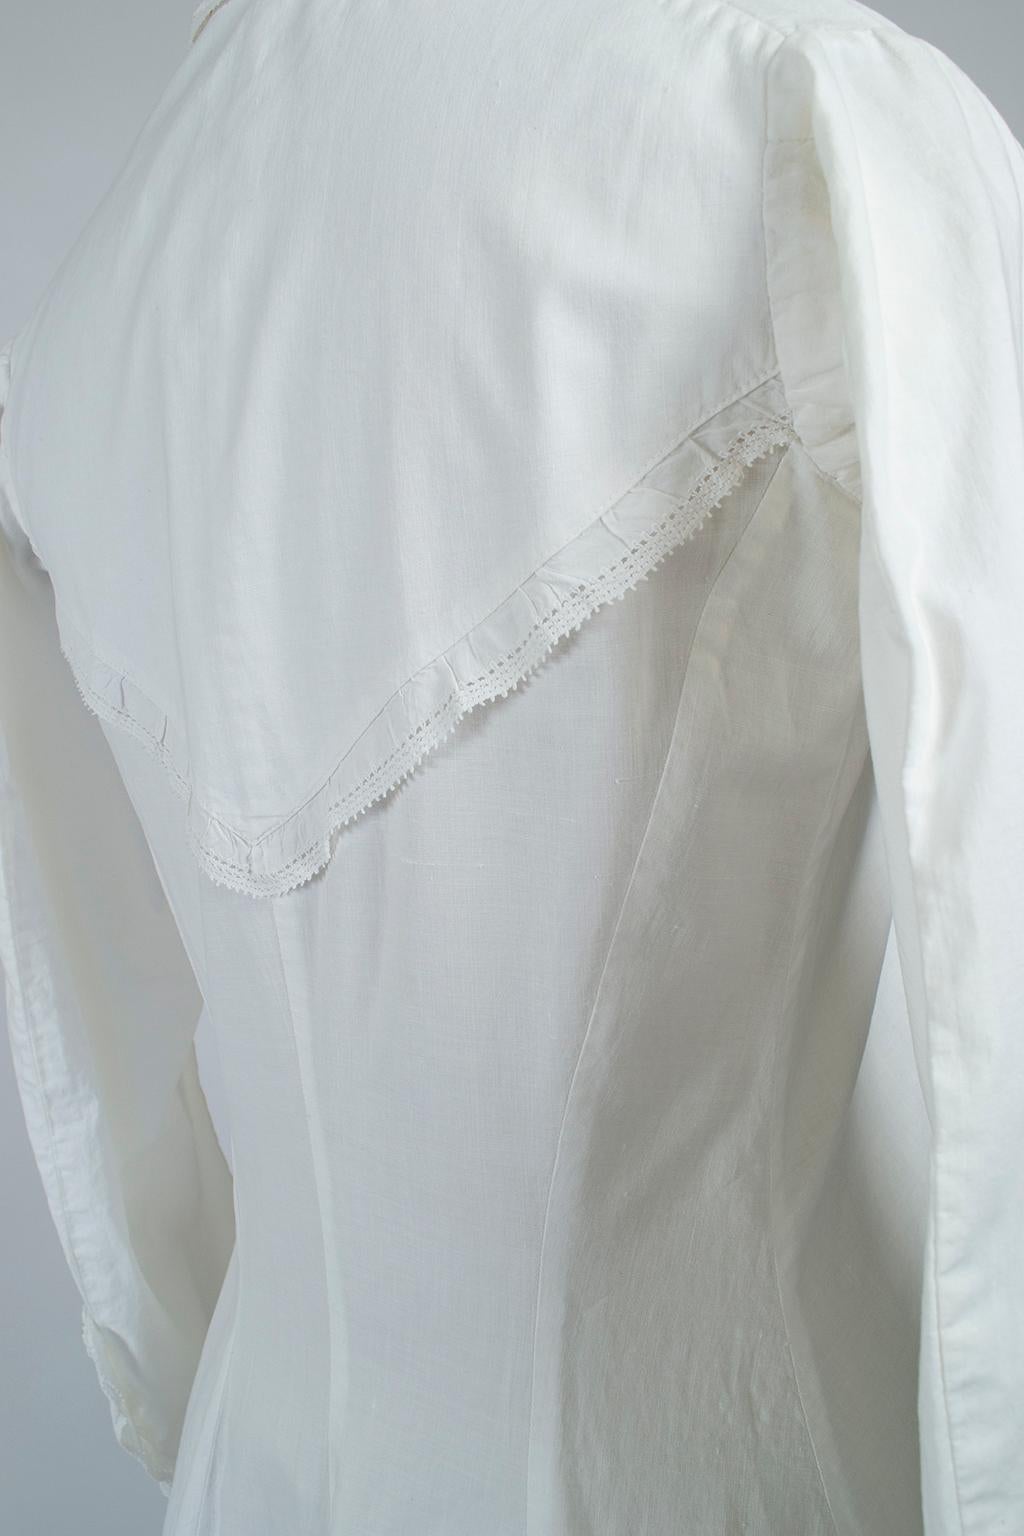 Original Civil War White Western Prairie Homesteader Shirtwaist Dress -XS, 1860s For Sale 1